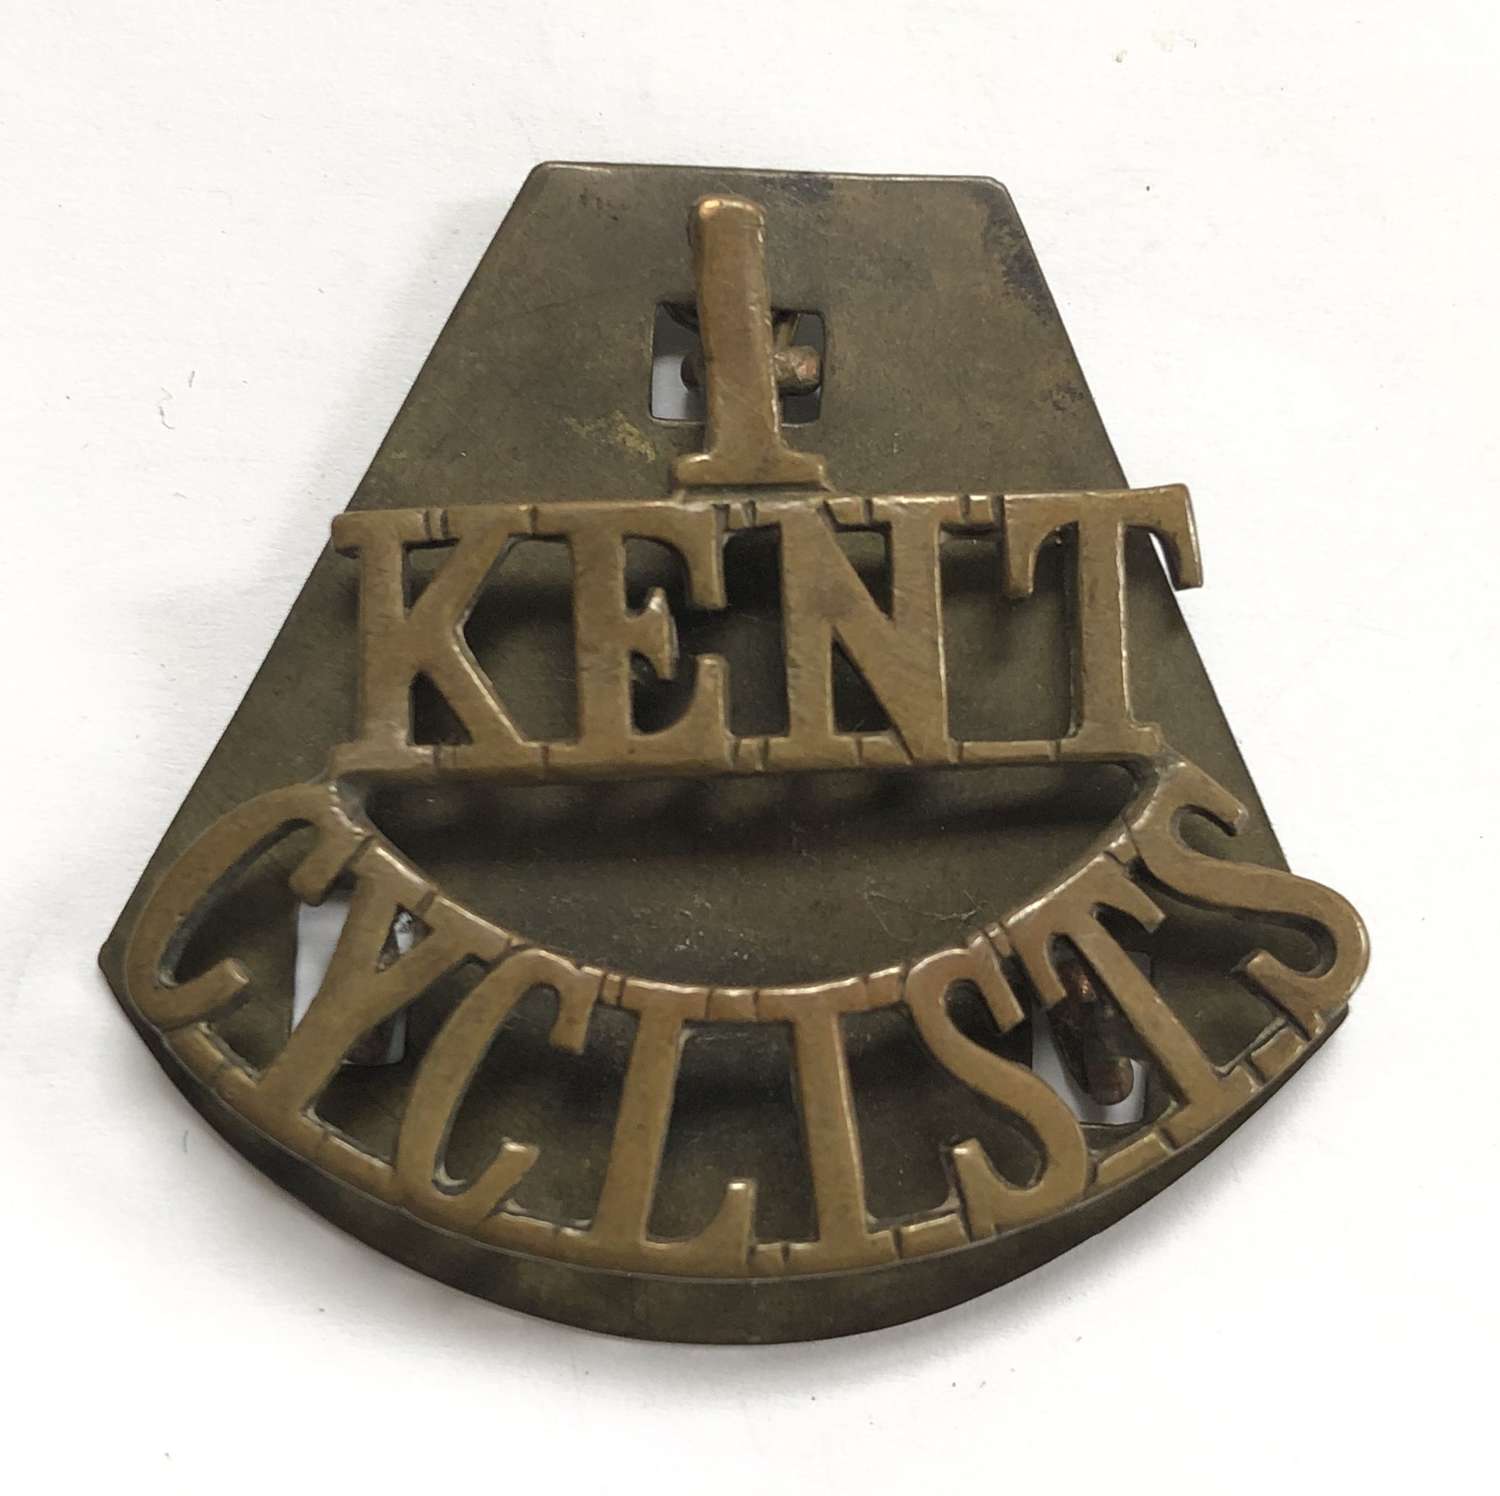 1 / KENT / CYCLISTS brass shoulder title circa 1910-20